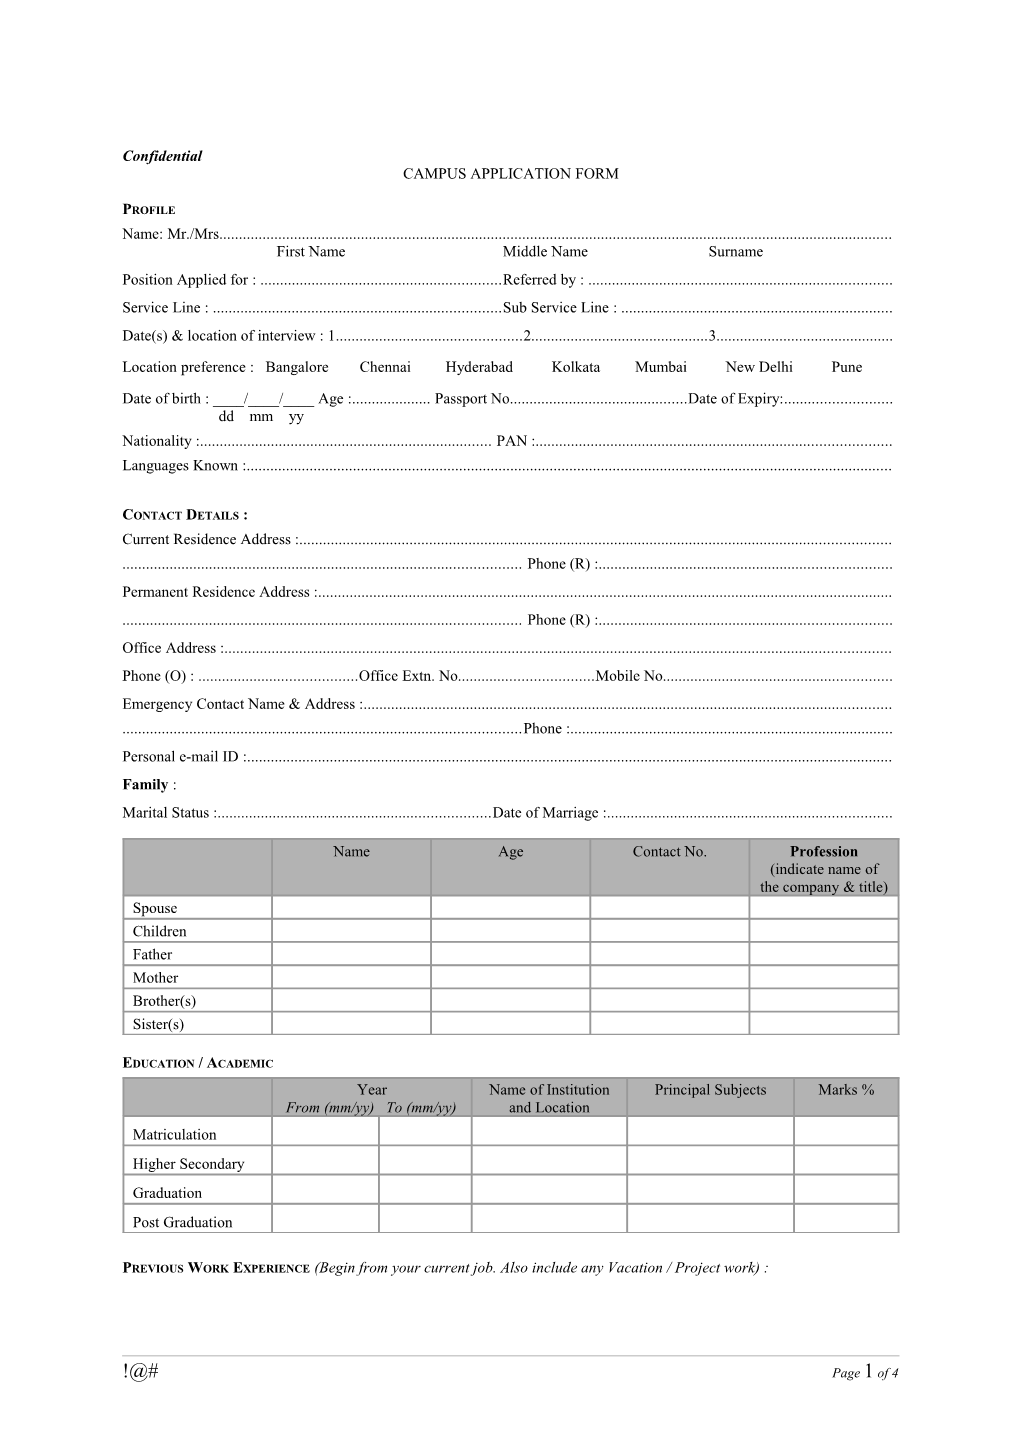 Campus Application Form